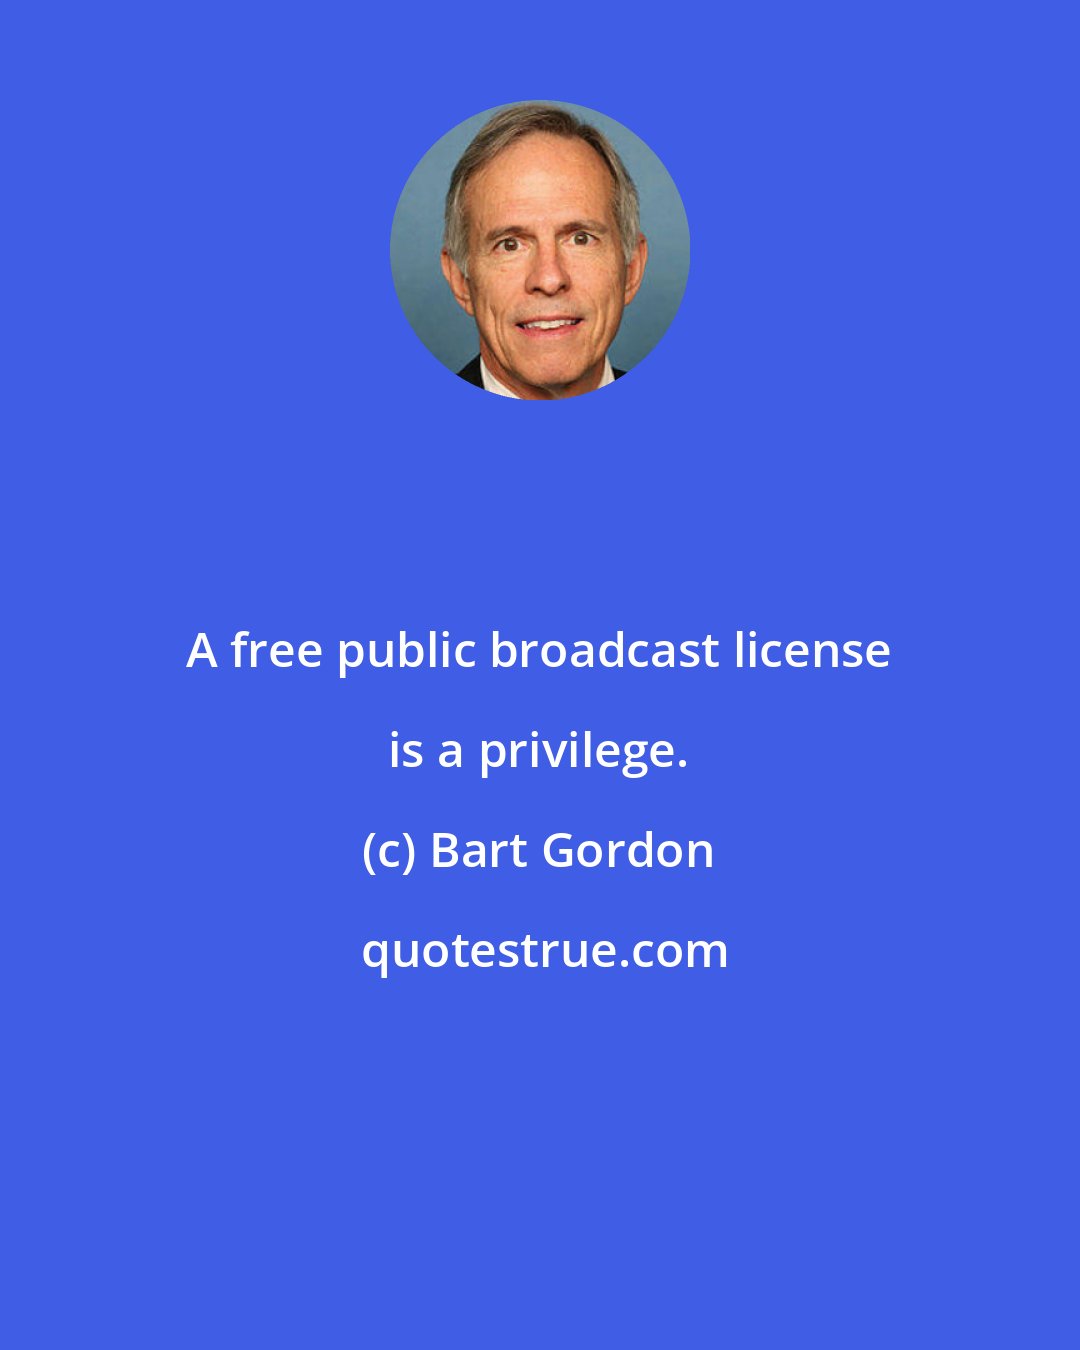 Bart Gordon: A free public broadcast license is a privilege.